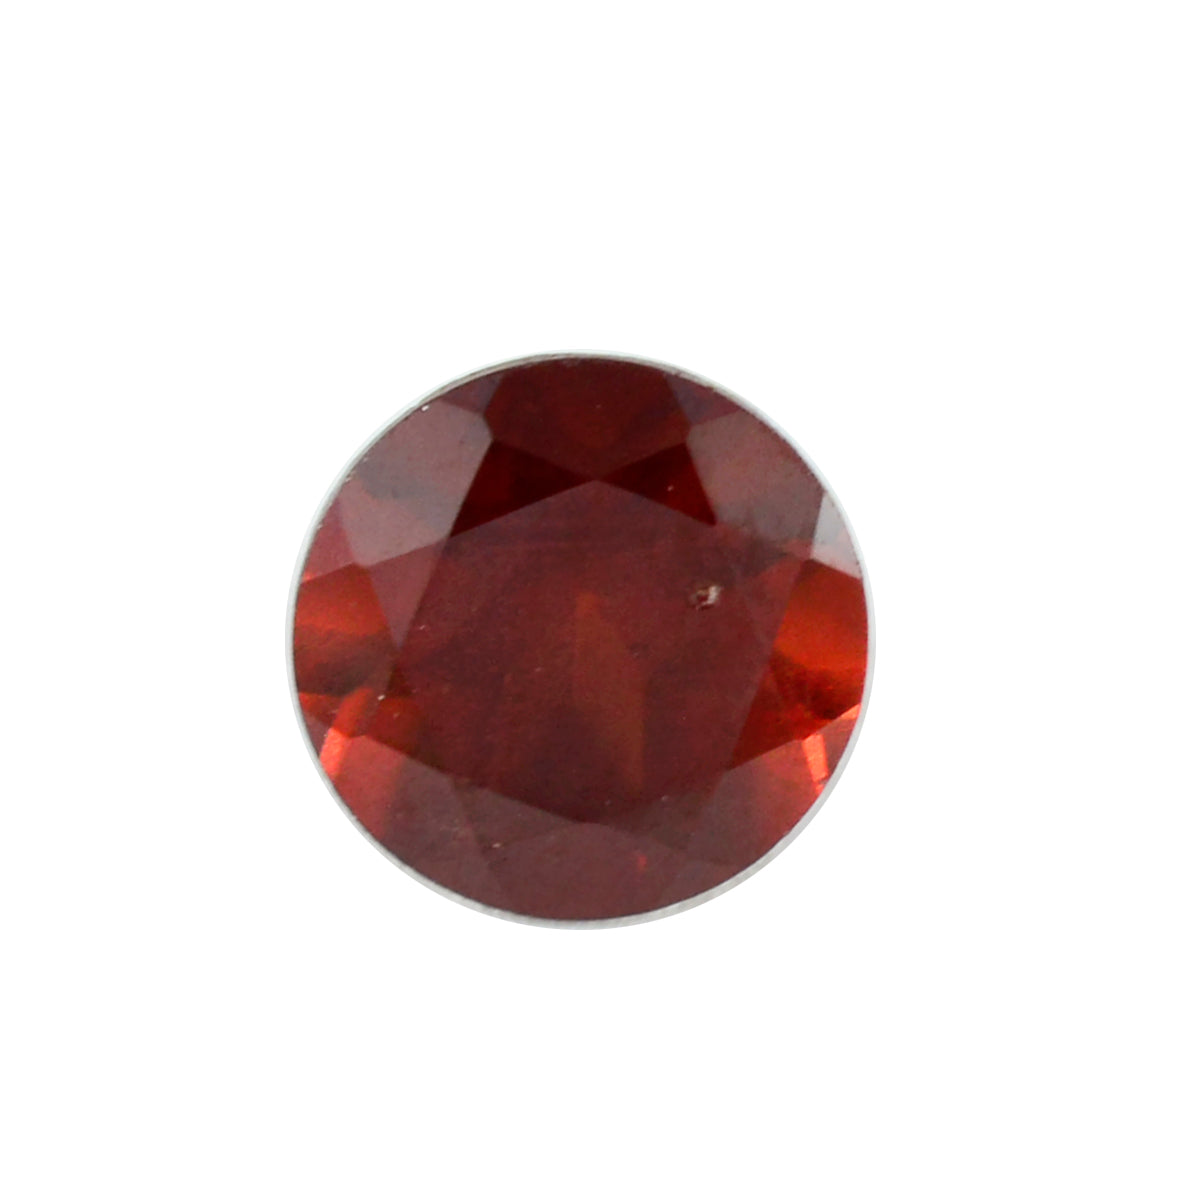 riyogems 1 шт. натуральный красный гранат ограненный 12x12 мм круглая форма драгоценный камень качества ААА